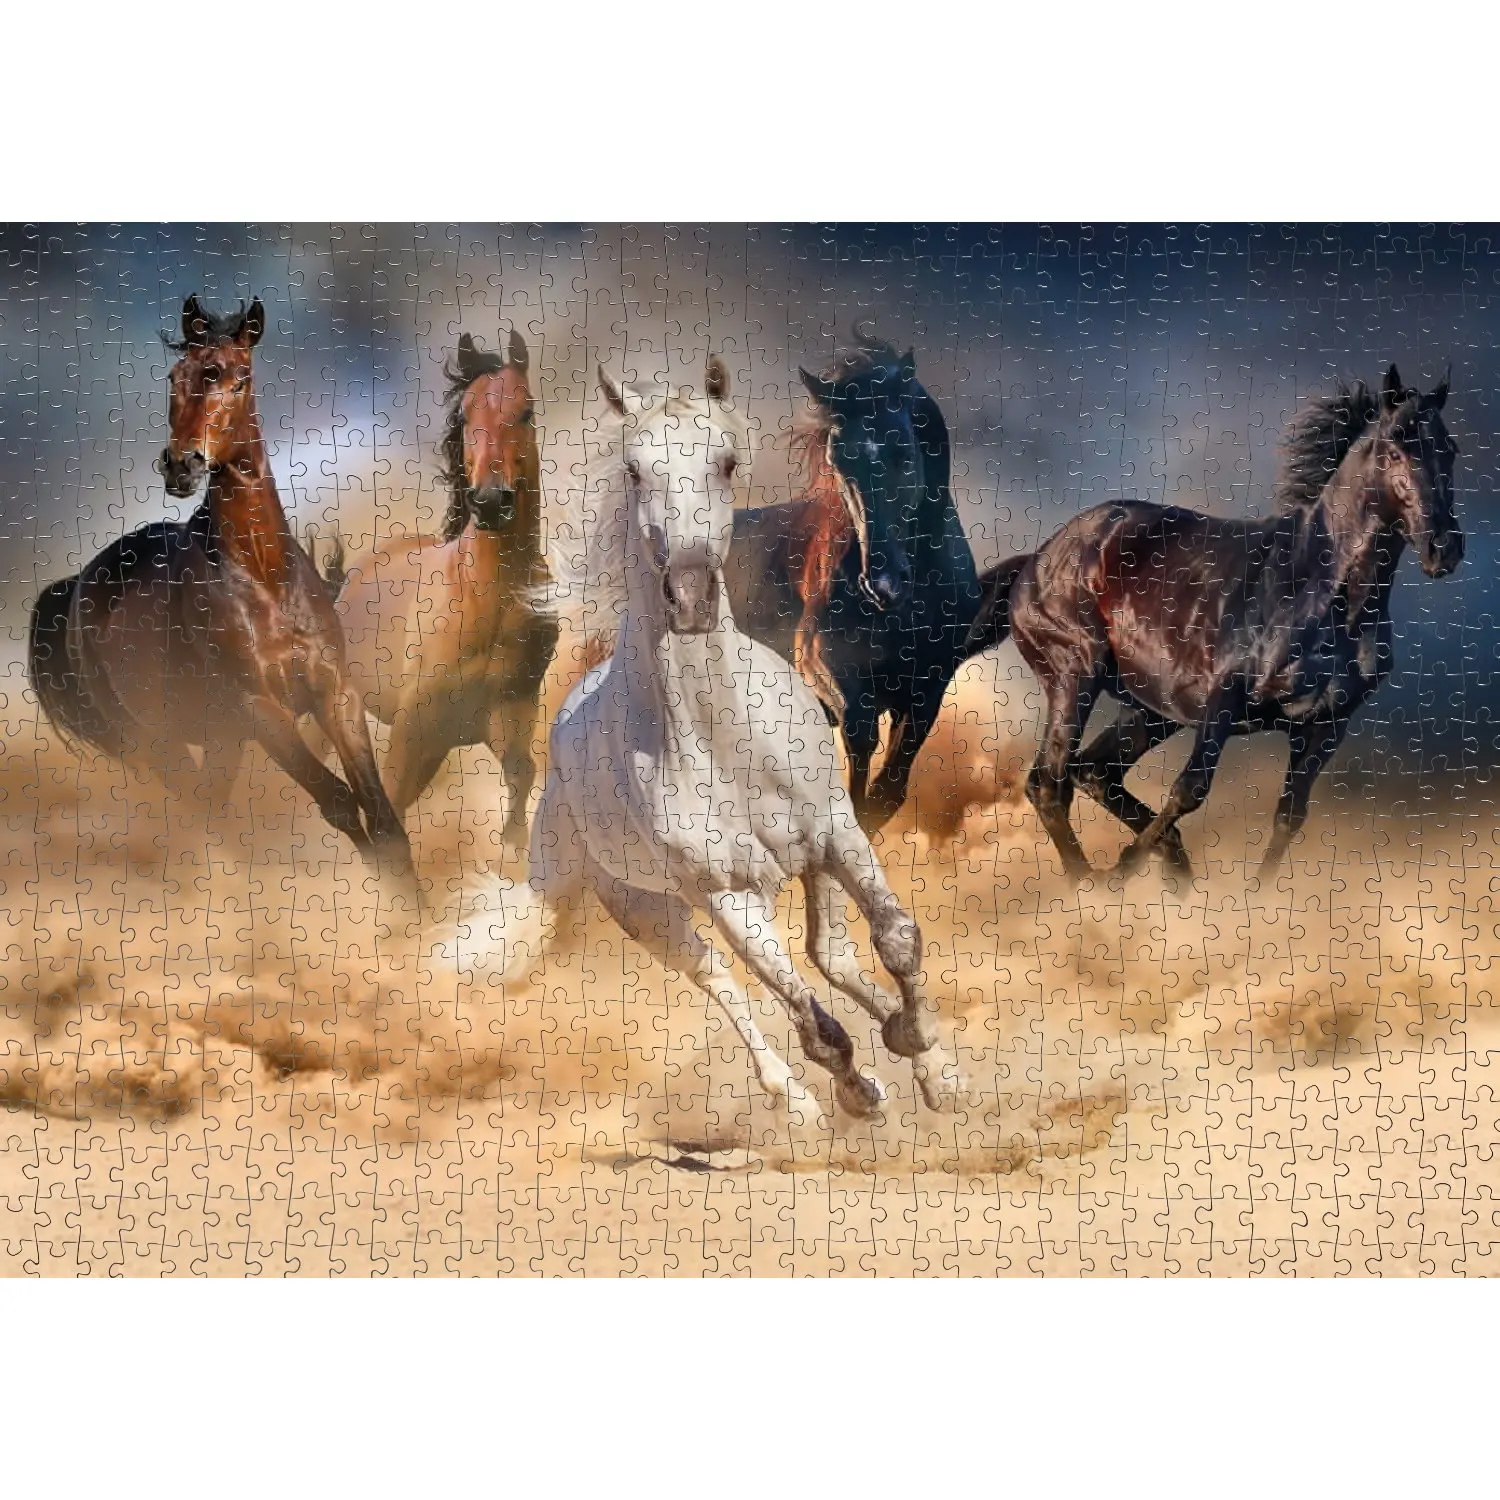 Пазл для Бегущих Лошадей Nova с порошковым дымом, 2000 шт., пазл для взрослых Бегущих Лошадей на песке, пазл из картона, пазл-пазл от AliExpress RU&CIS NEW